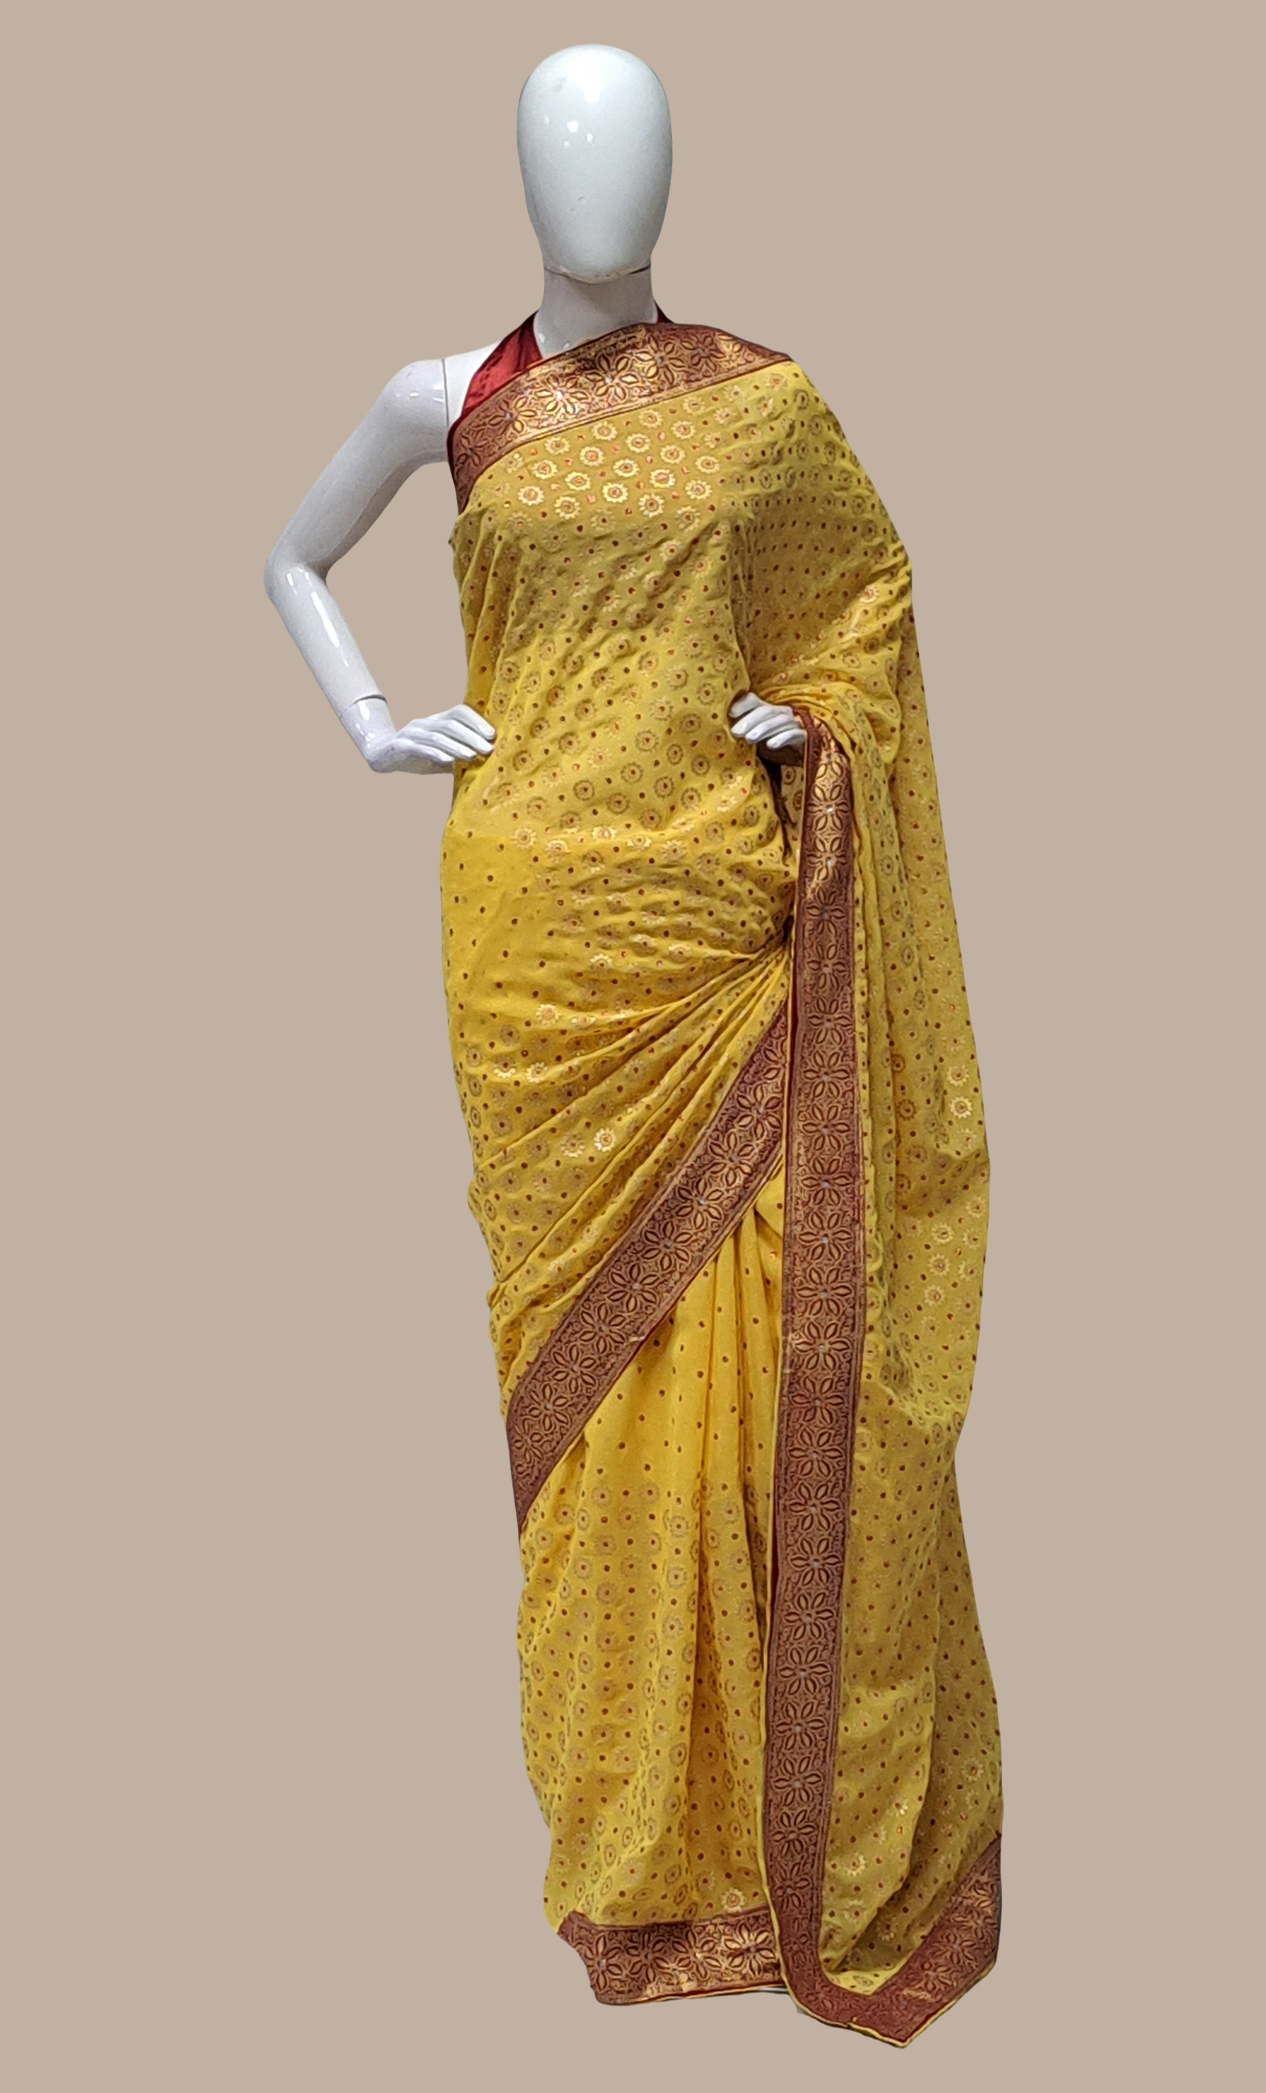 Canary Yellow Printed Sari